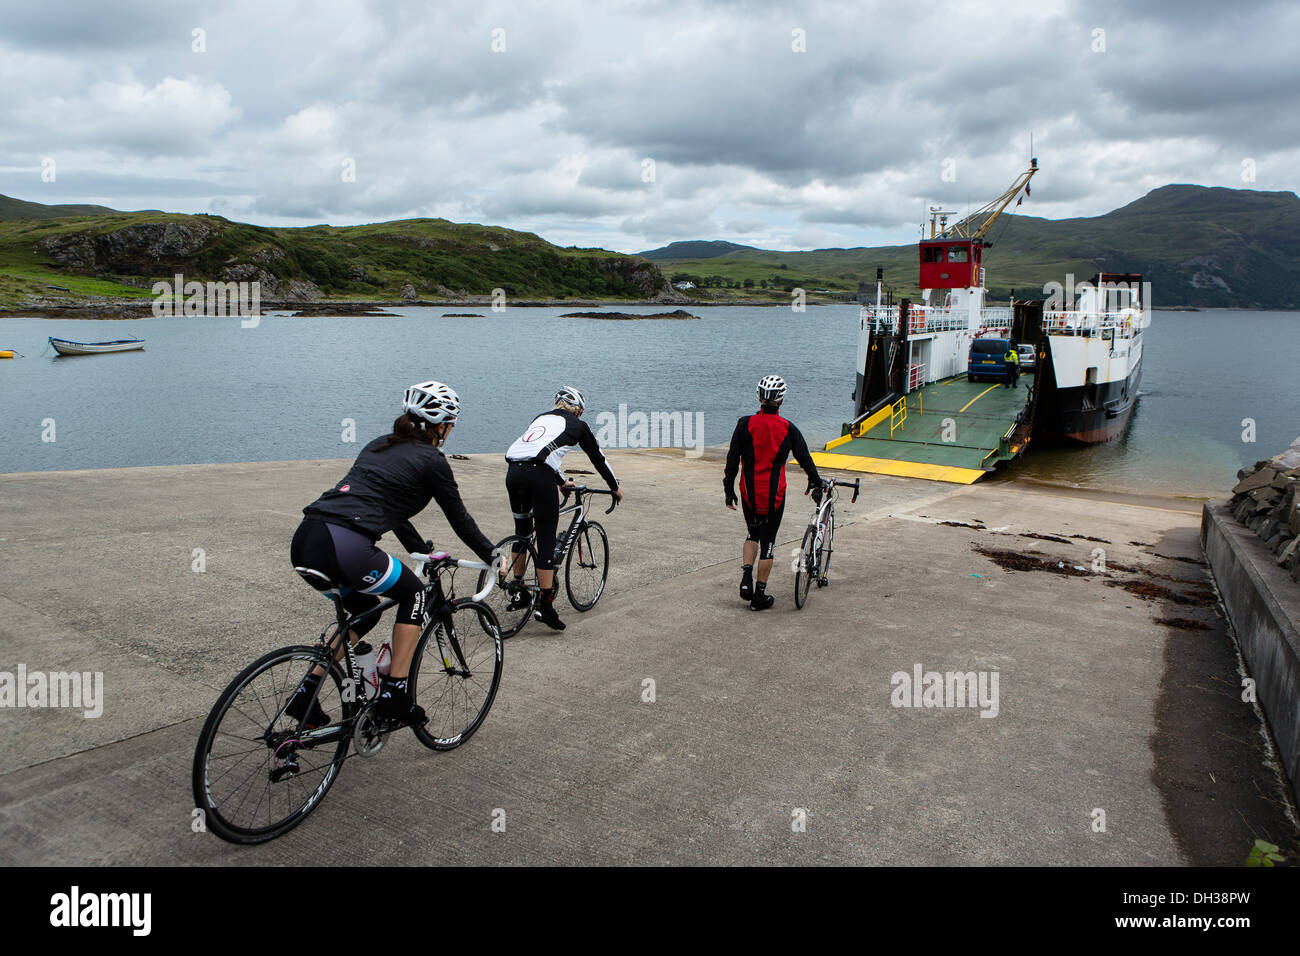 Three cyclists prepare to board a ferry in the Scottish Highlands, Scotland, United Kingdom Stock Photo